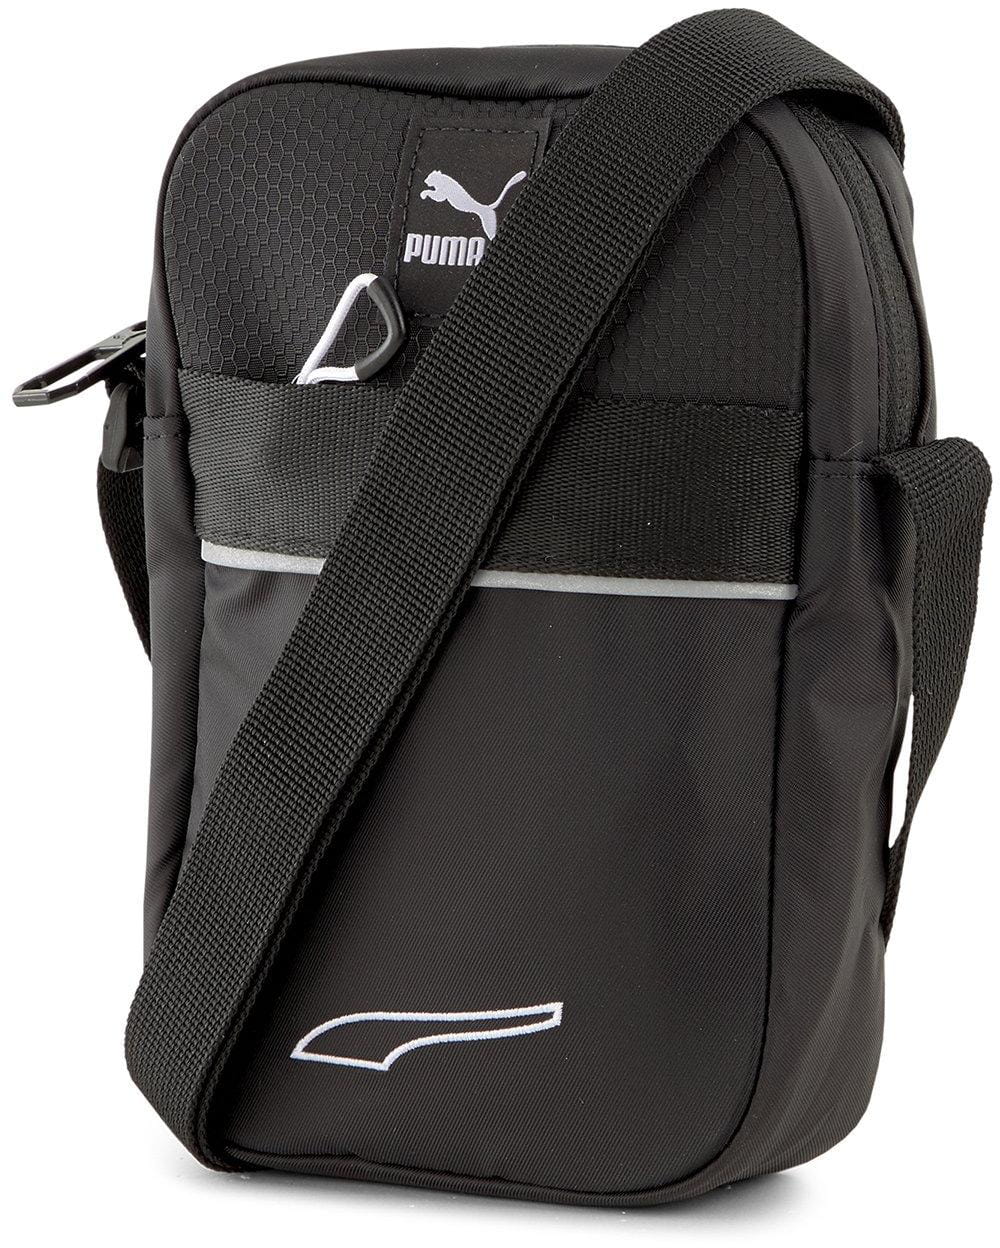 Bolsas y mochilas Puma EvoPLUS Compact Portable